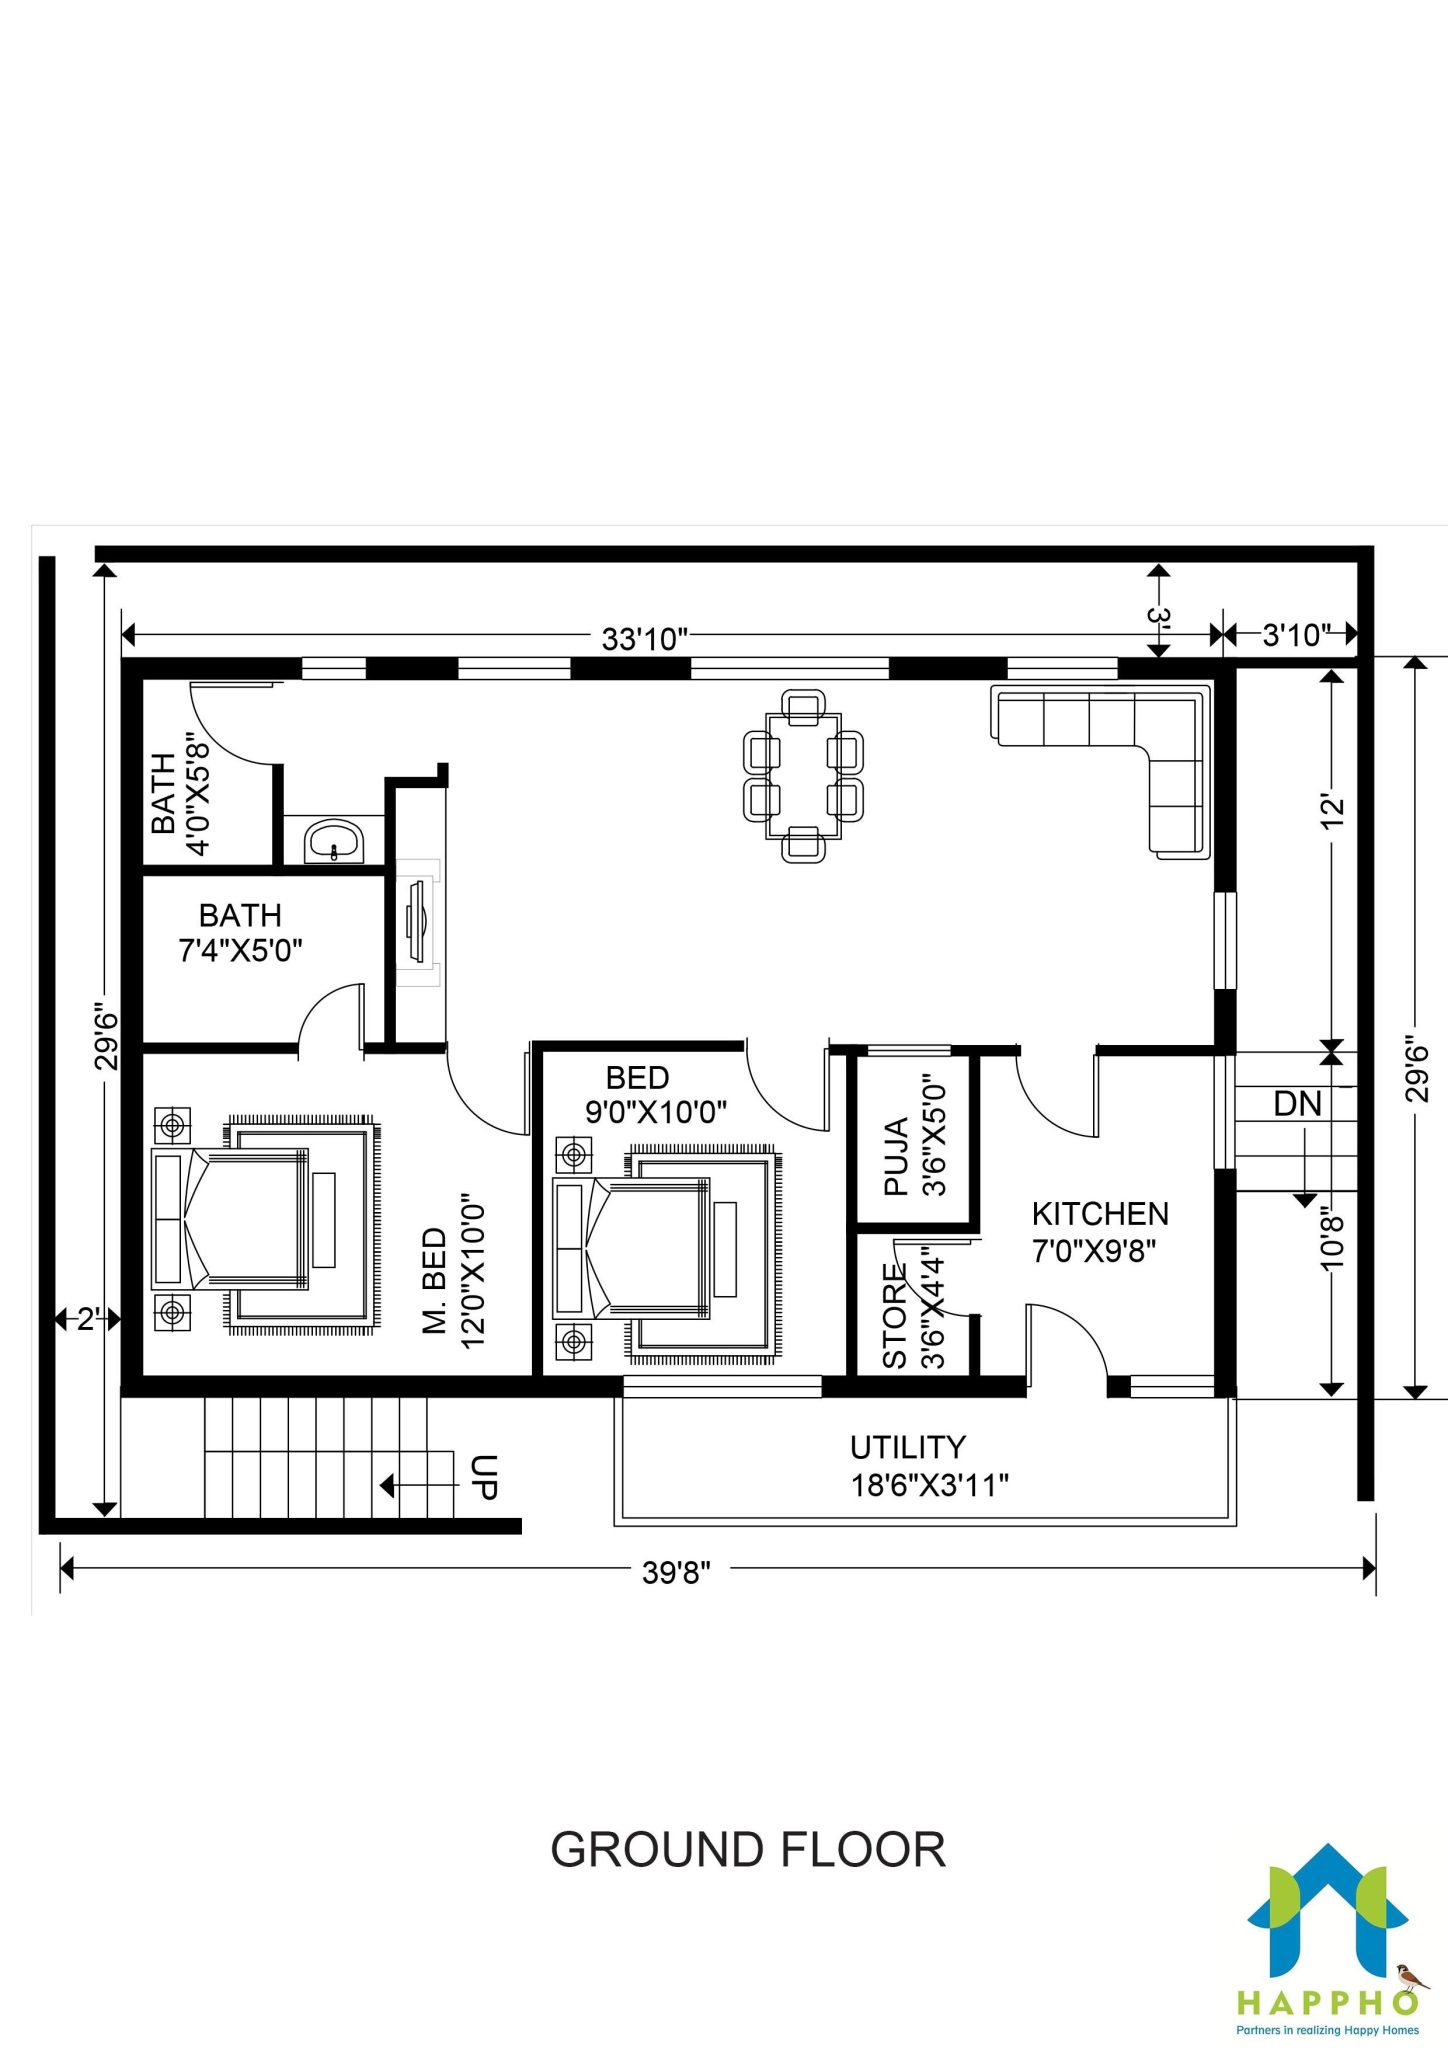 30x40 ground floor plan for single storey house